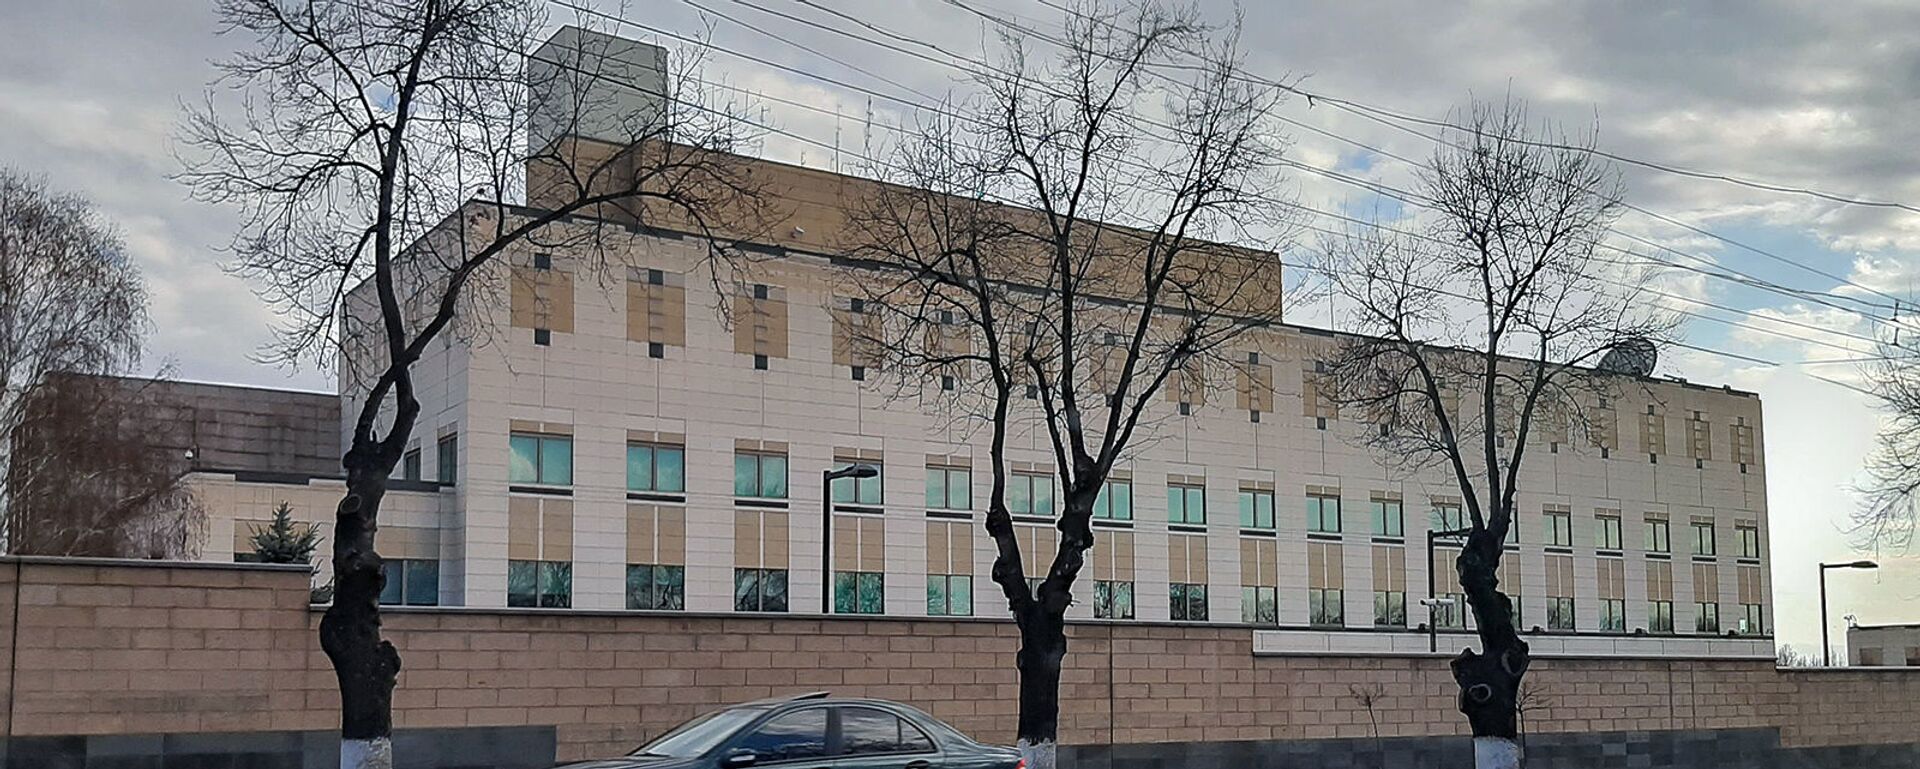 Здание посольства США в Армении - Sputnik Արմենիա, 1920, 20.07.2021